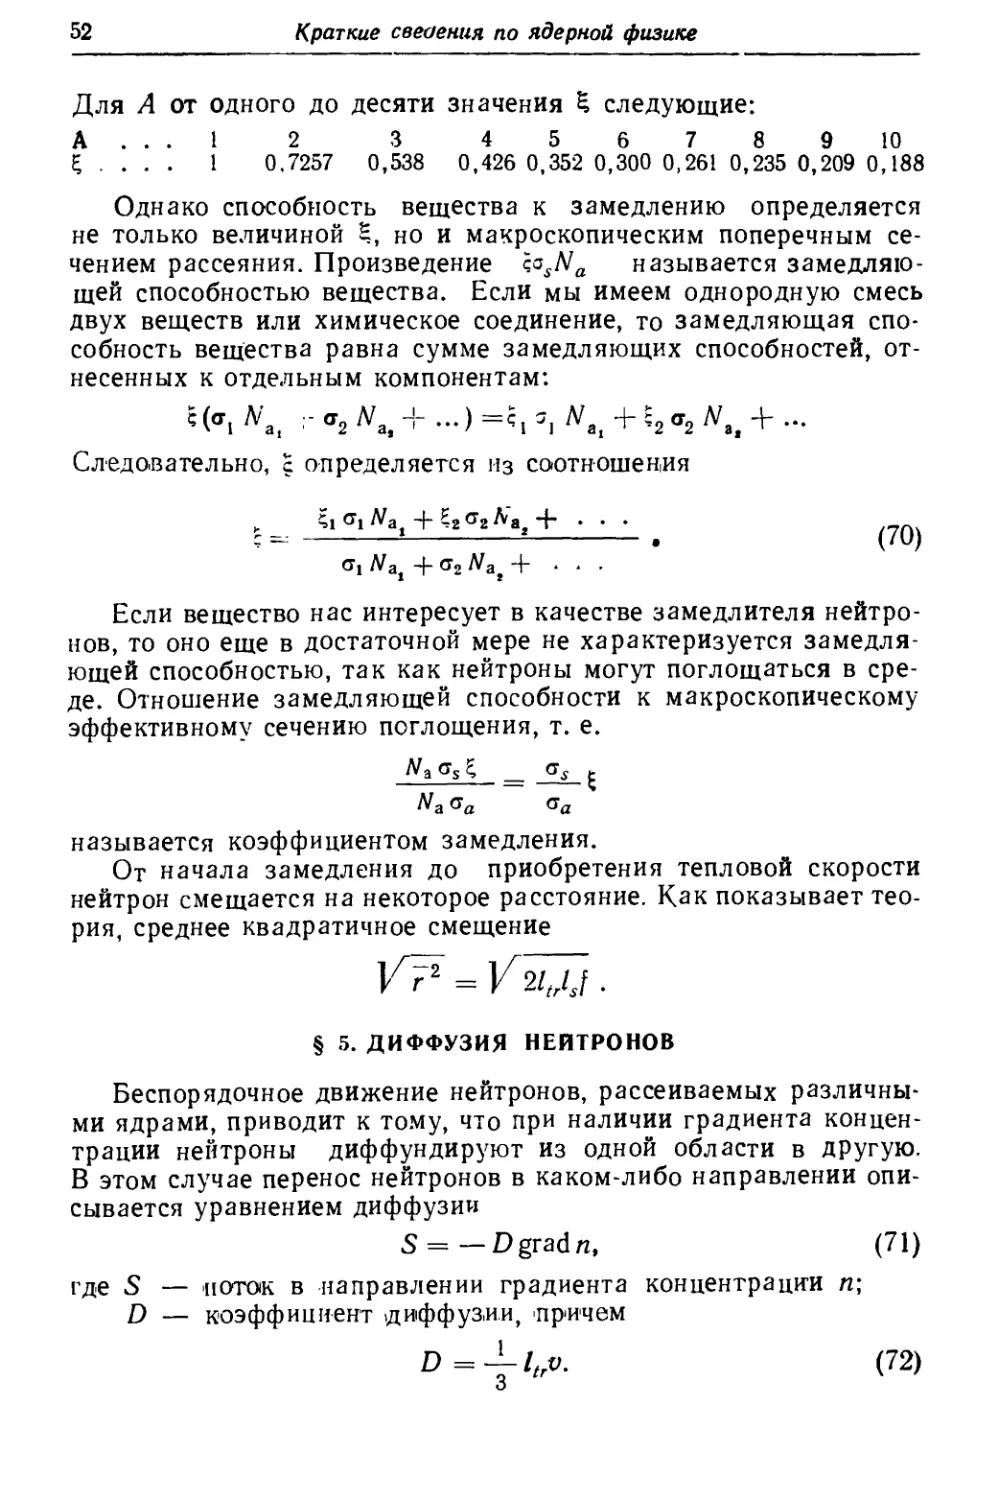 § 5. Диффузия нейтронов